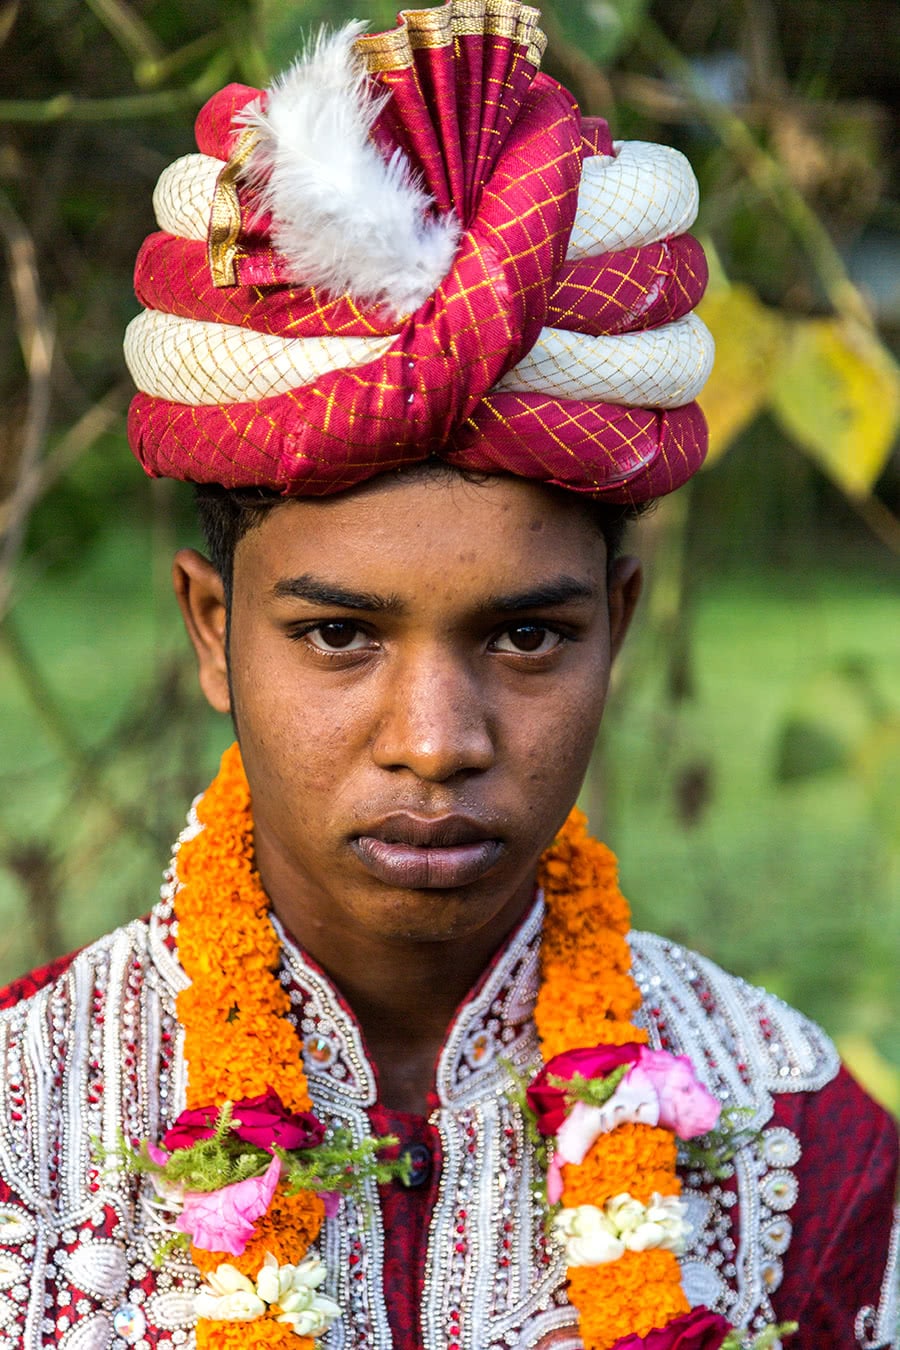 A young boy in his traditional wedding attire in Chandanaish, Bangladesh.